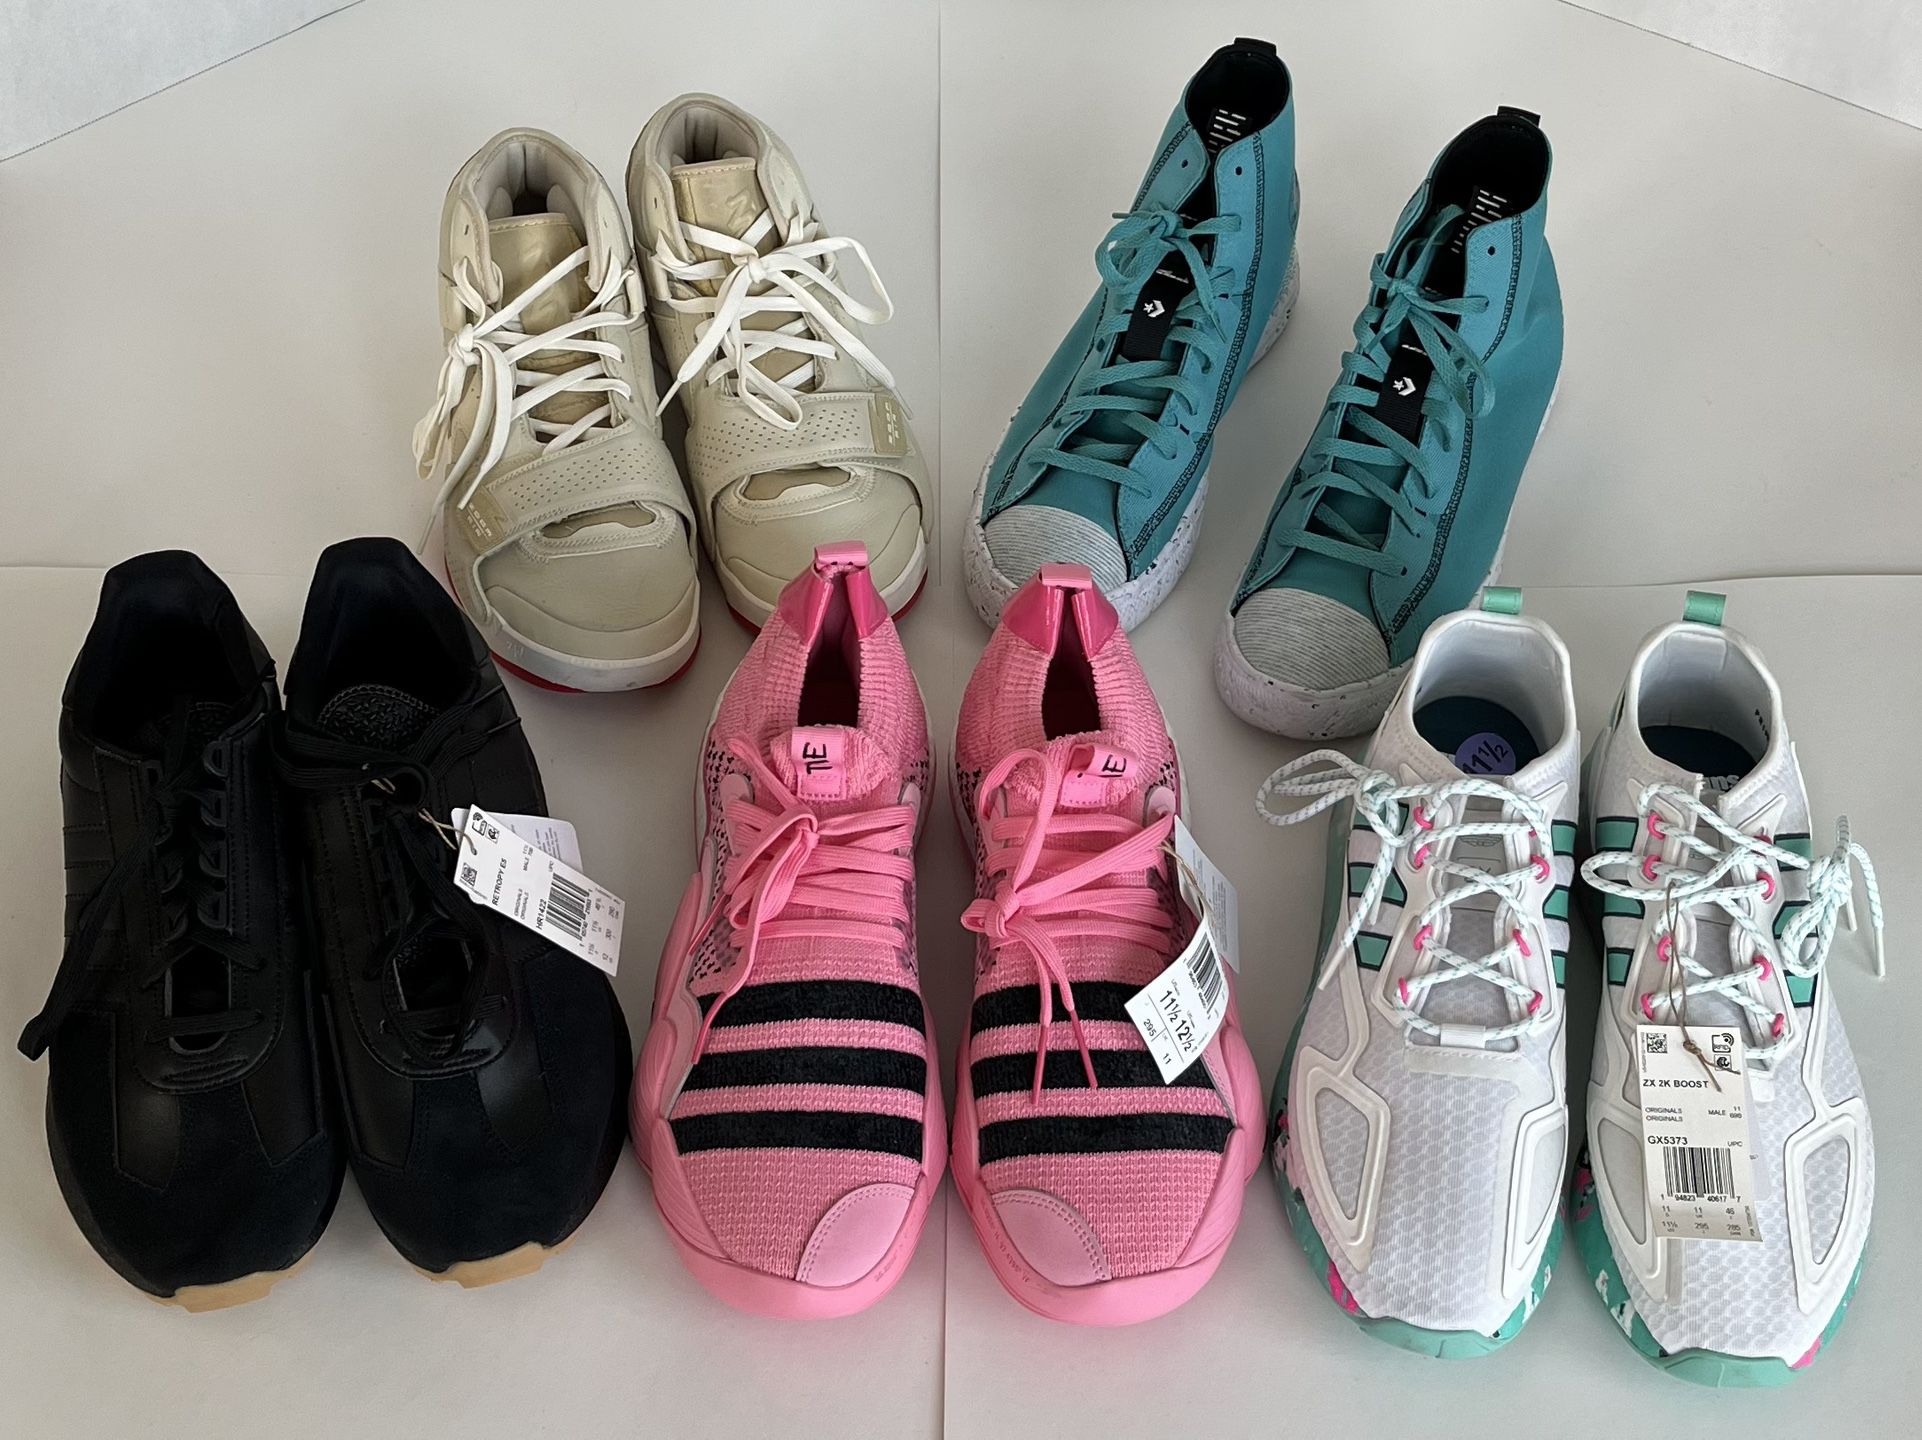 Jordan Adidas Converse Men's Size 11.5